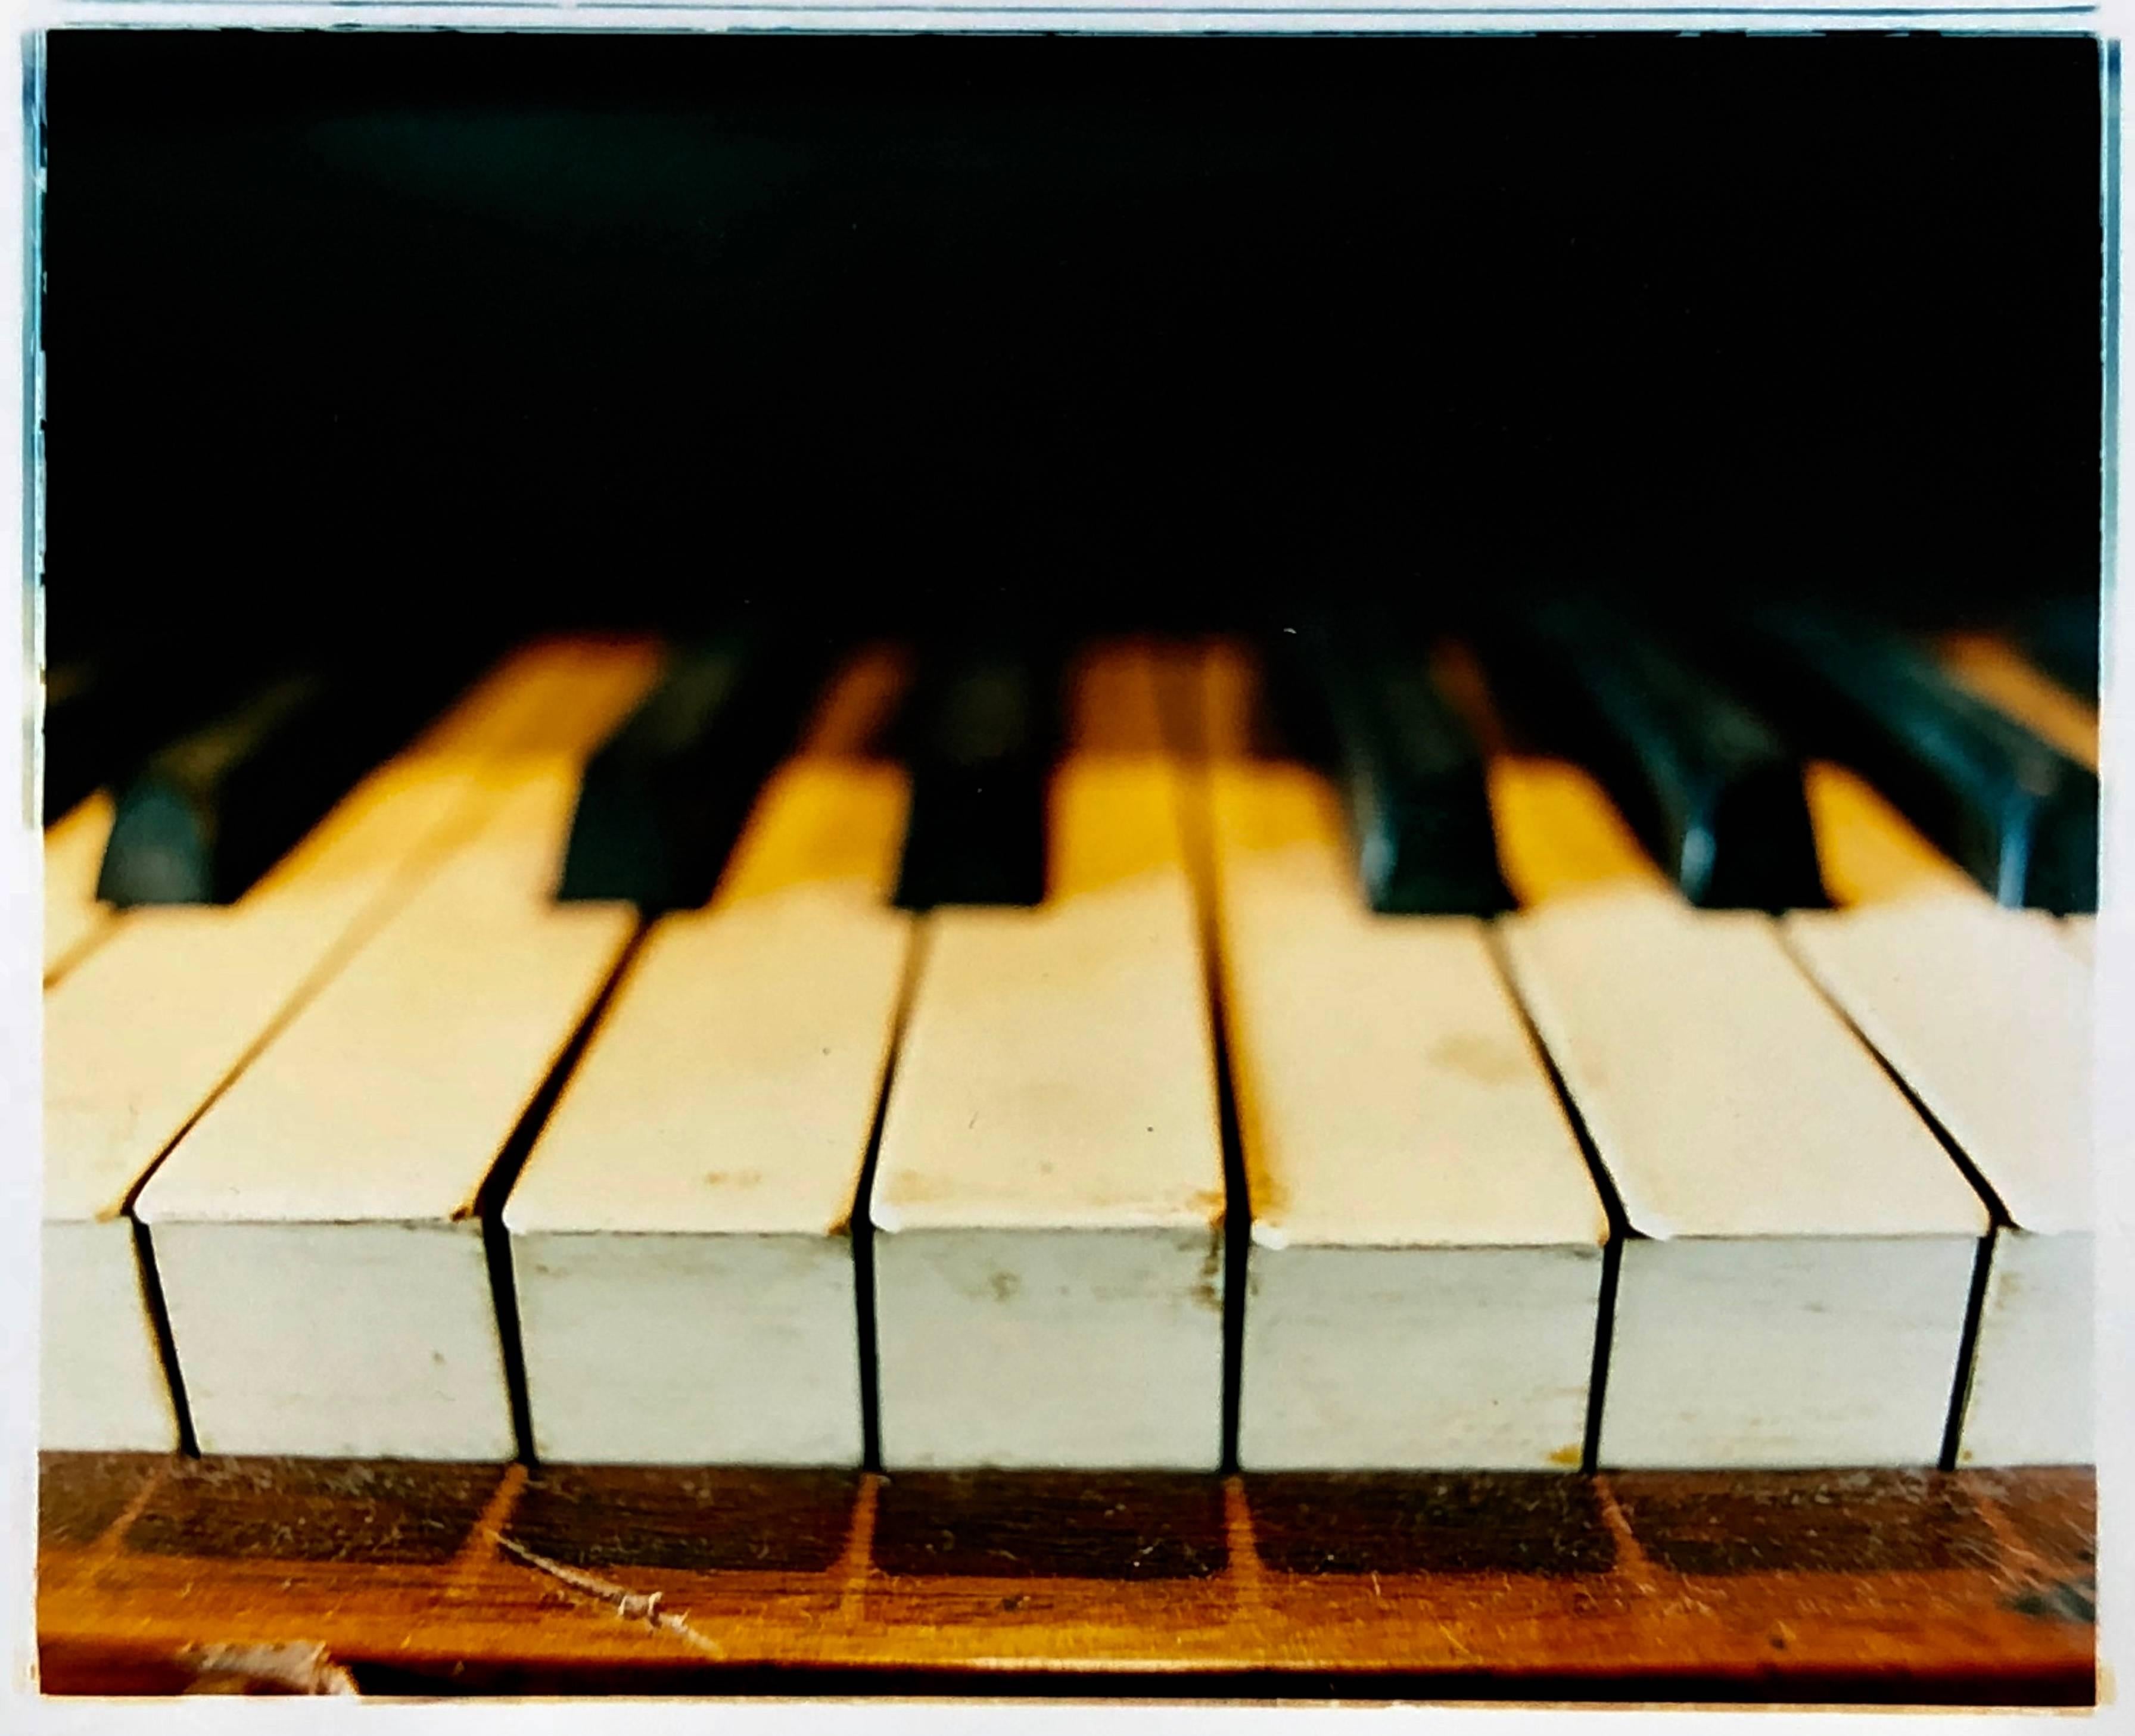 Richard Heeps Interior Print - Piano Keys, Stockton-on-Tees - Music color photography